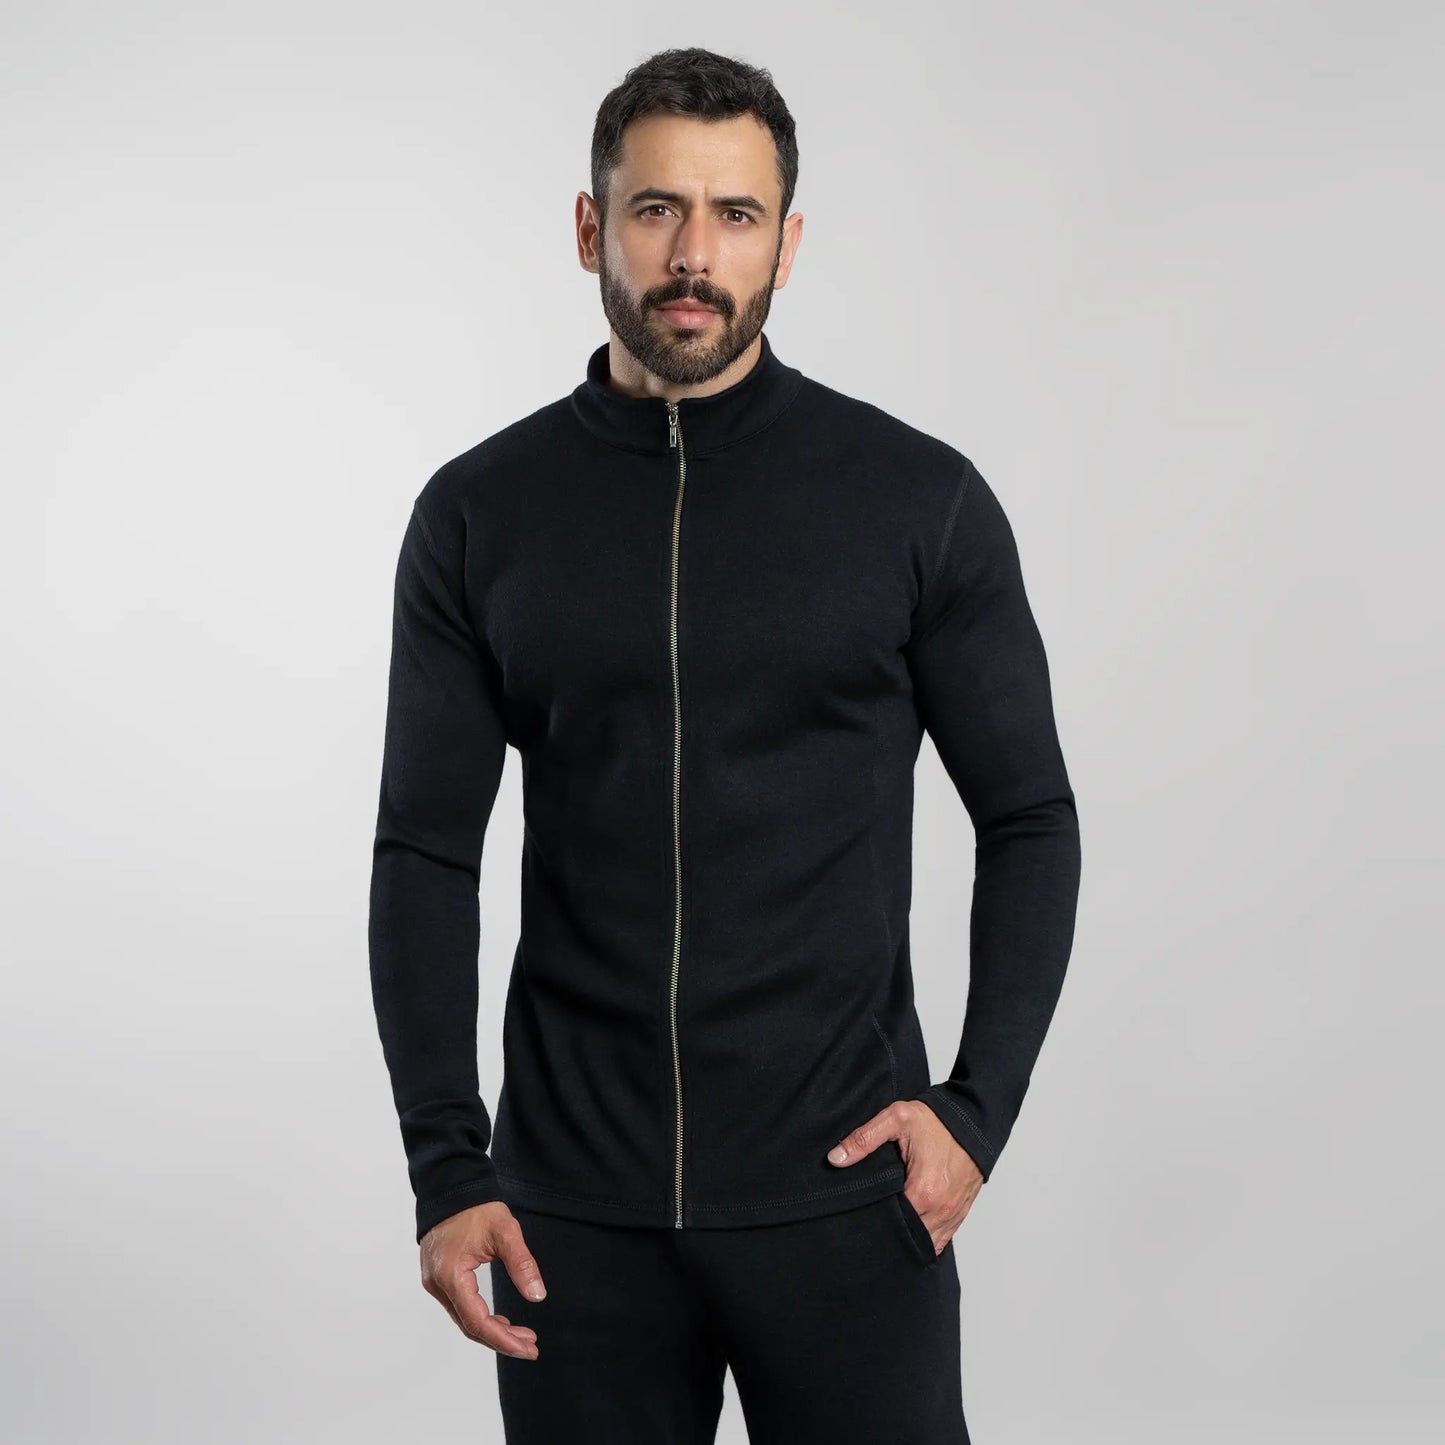 mens adventure jacket full zip color black